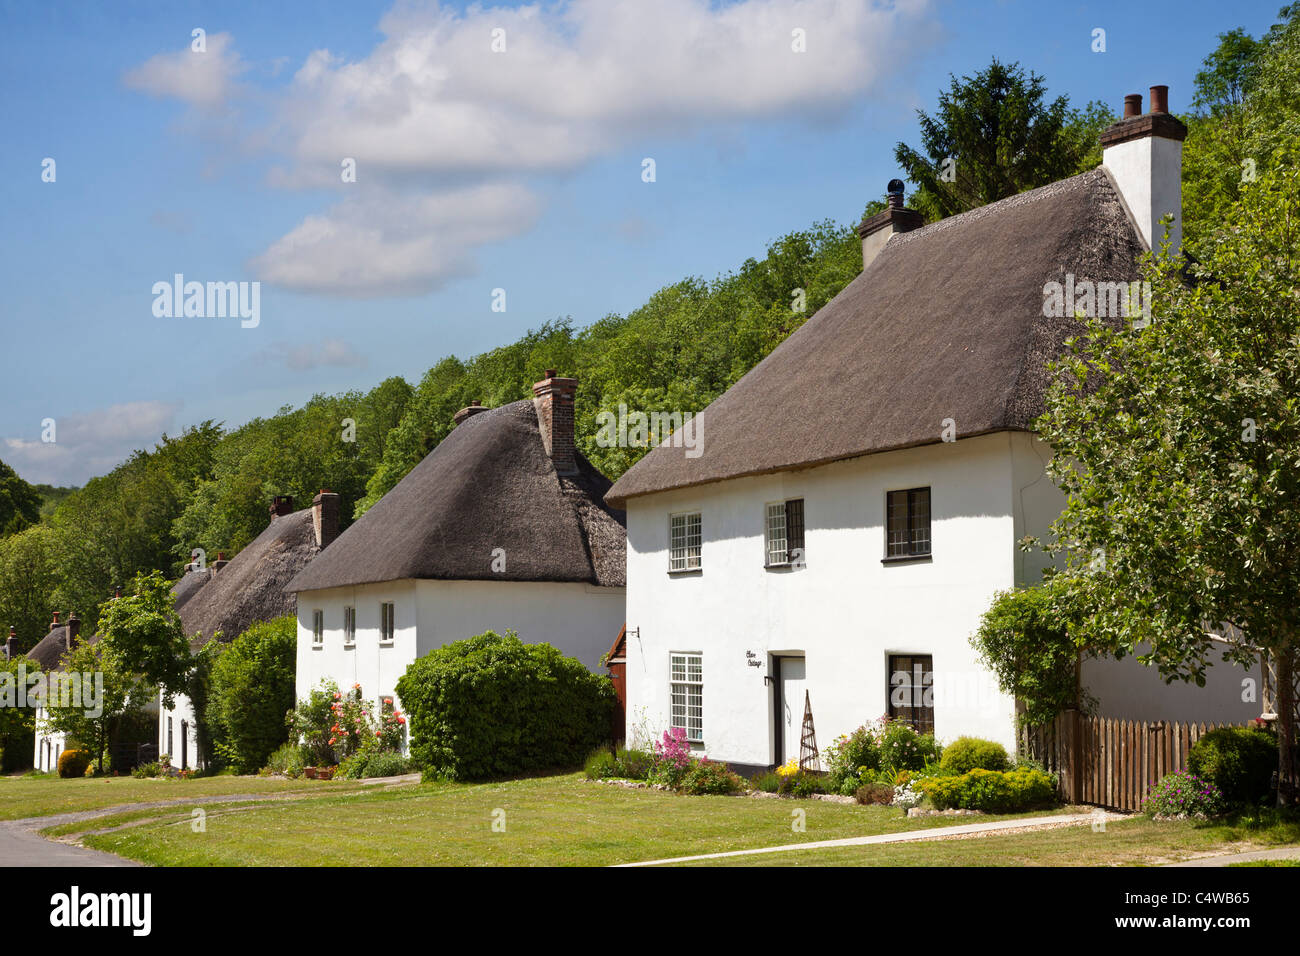 Row of detached thatched cottages, Milton Abbas village, Dorset, England, UK Stock Photo